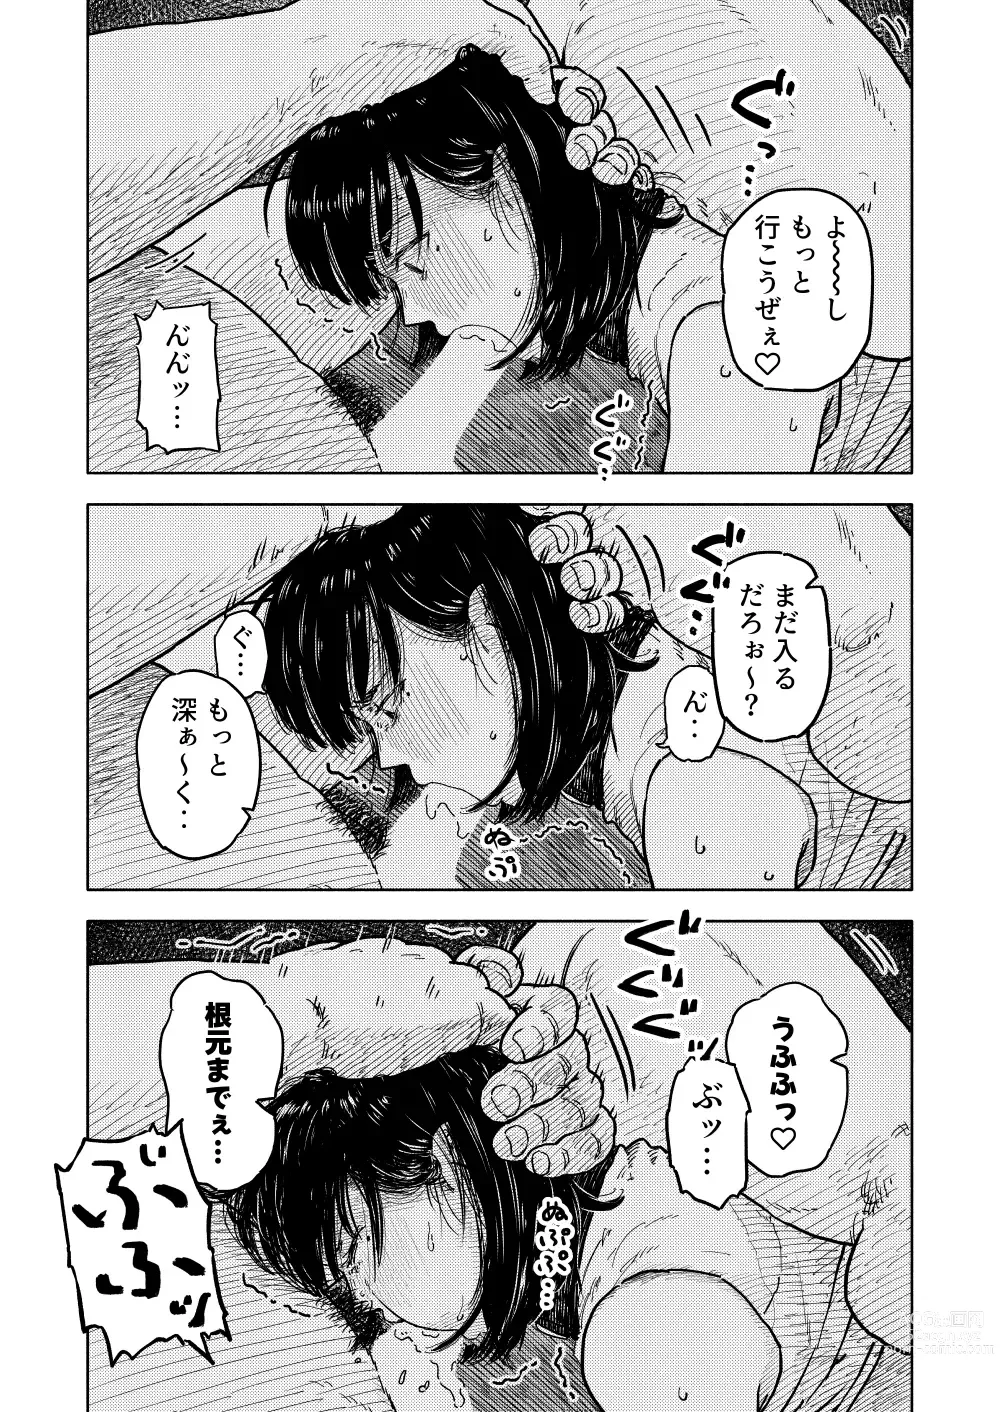 Page 26 of doujinshi Fukaku